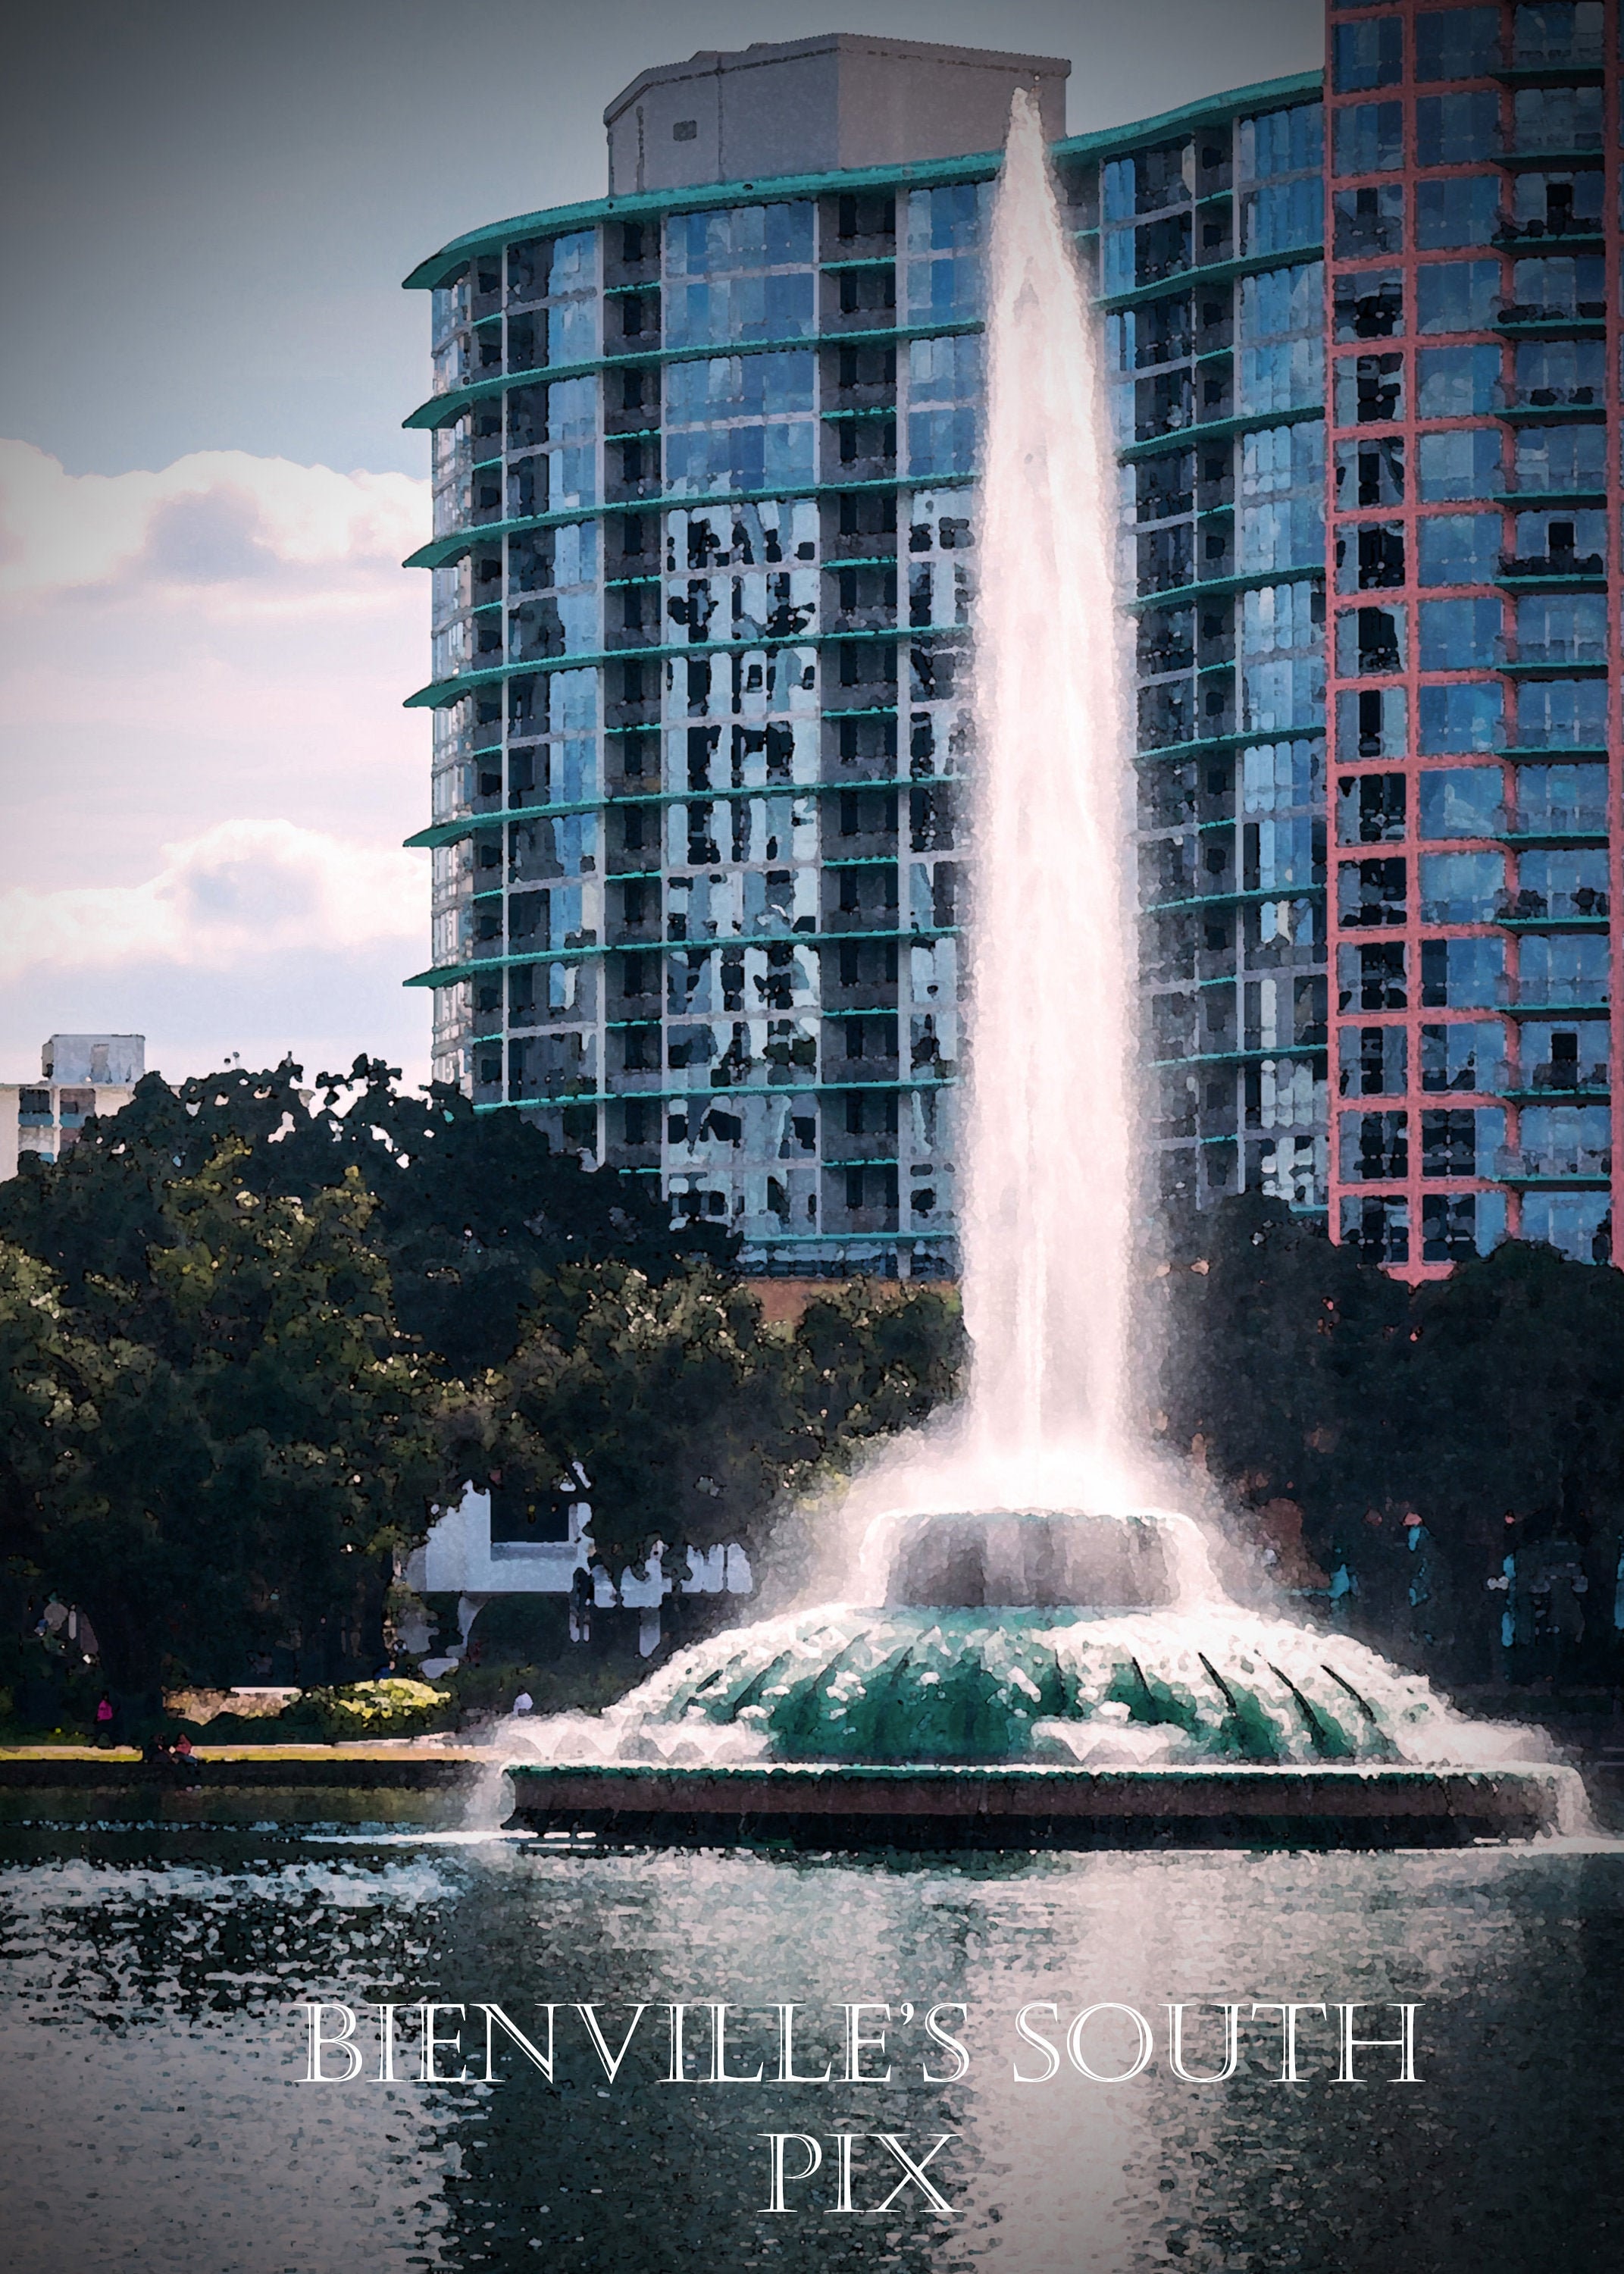 Orlando Florida Skyline & Fountain From Across Lake Eola~Continental  Postcard